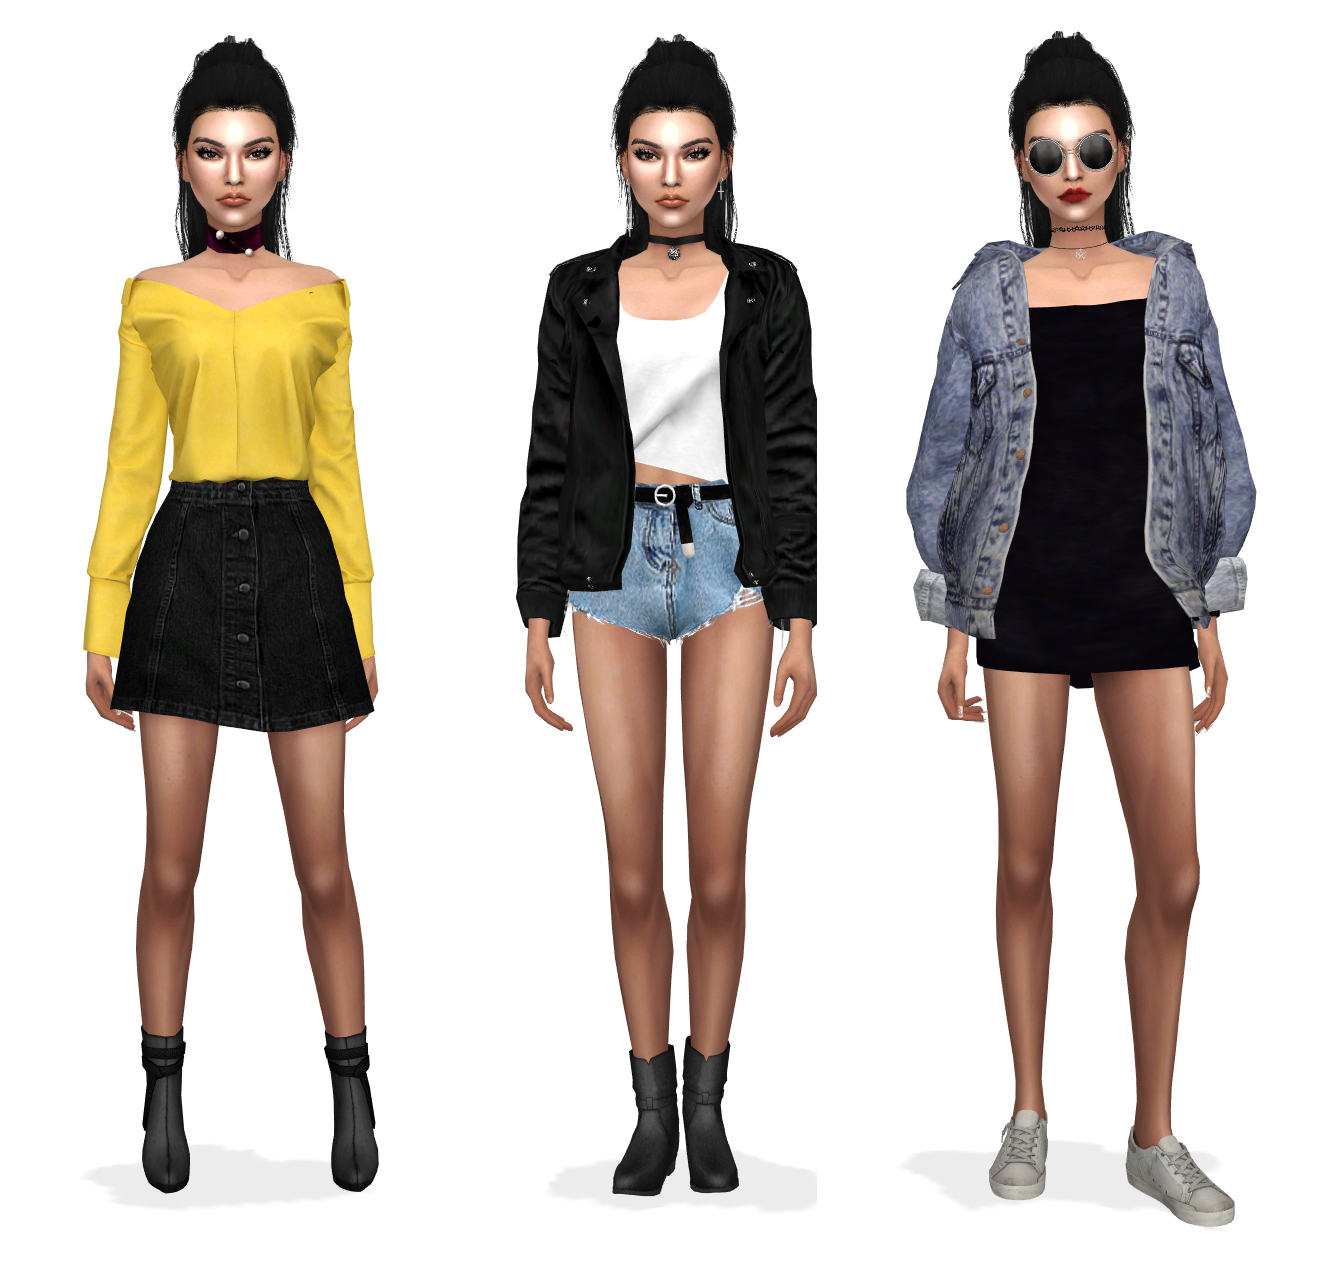 Moon Galaxy Sims: Sims 4 Kendall Jenner & LOOKBOOK